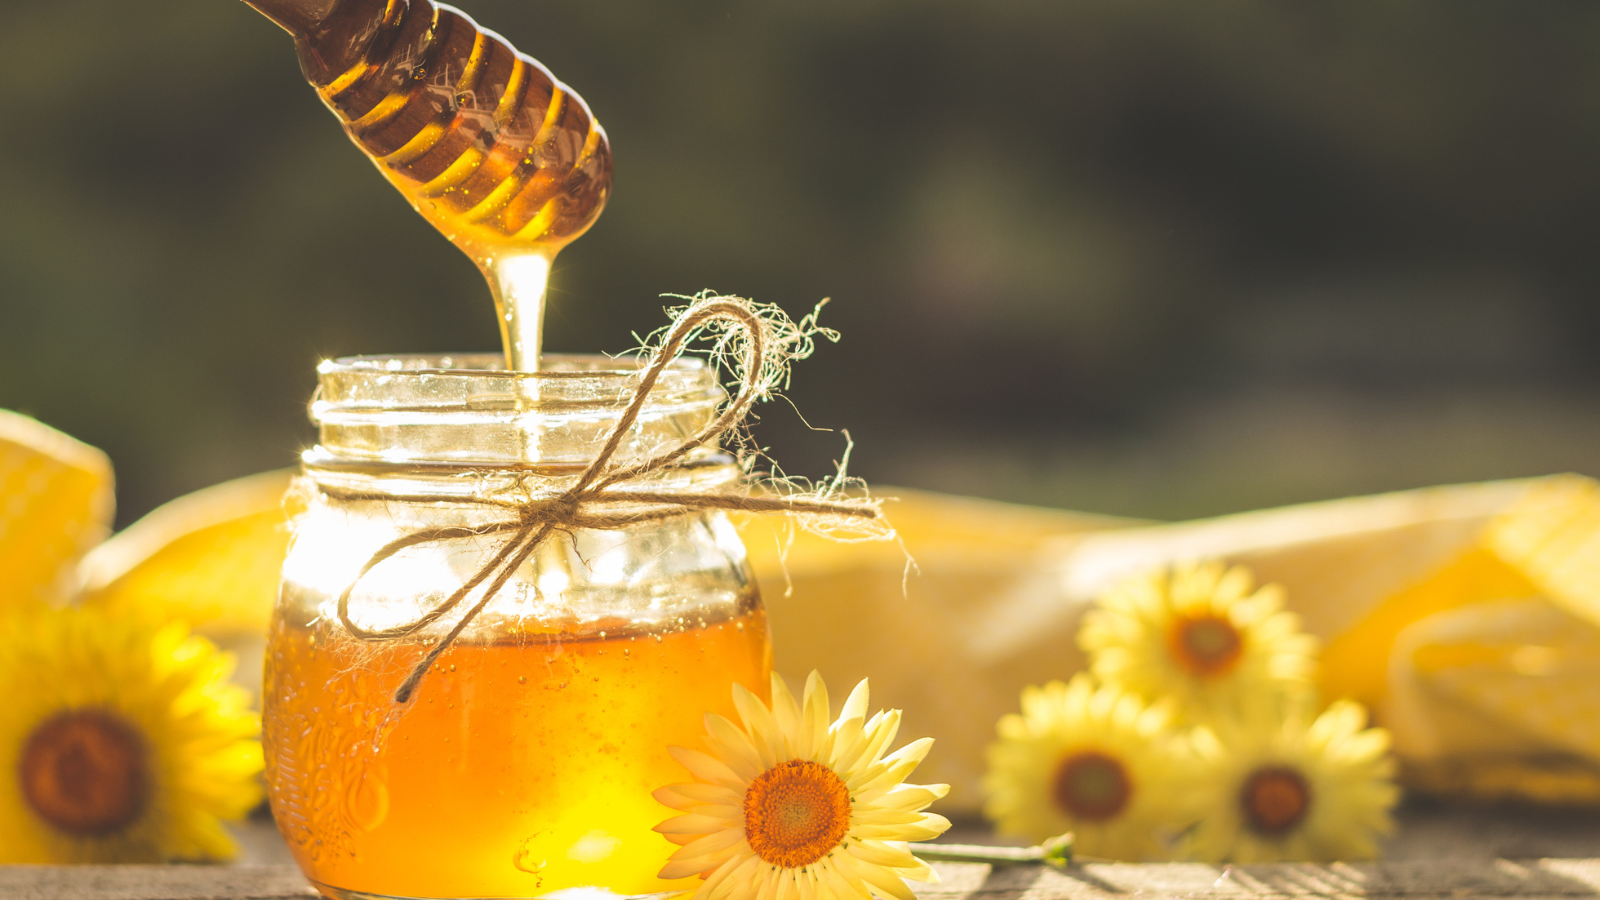 Glass jar of honey next to sunflowers